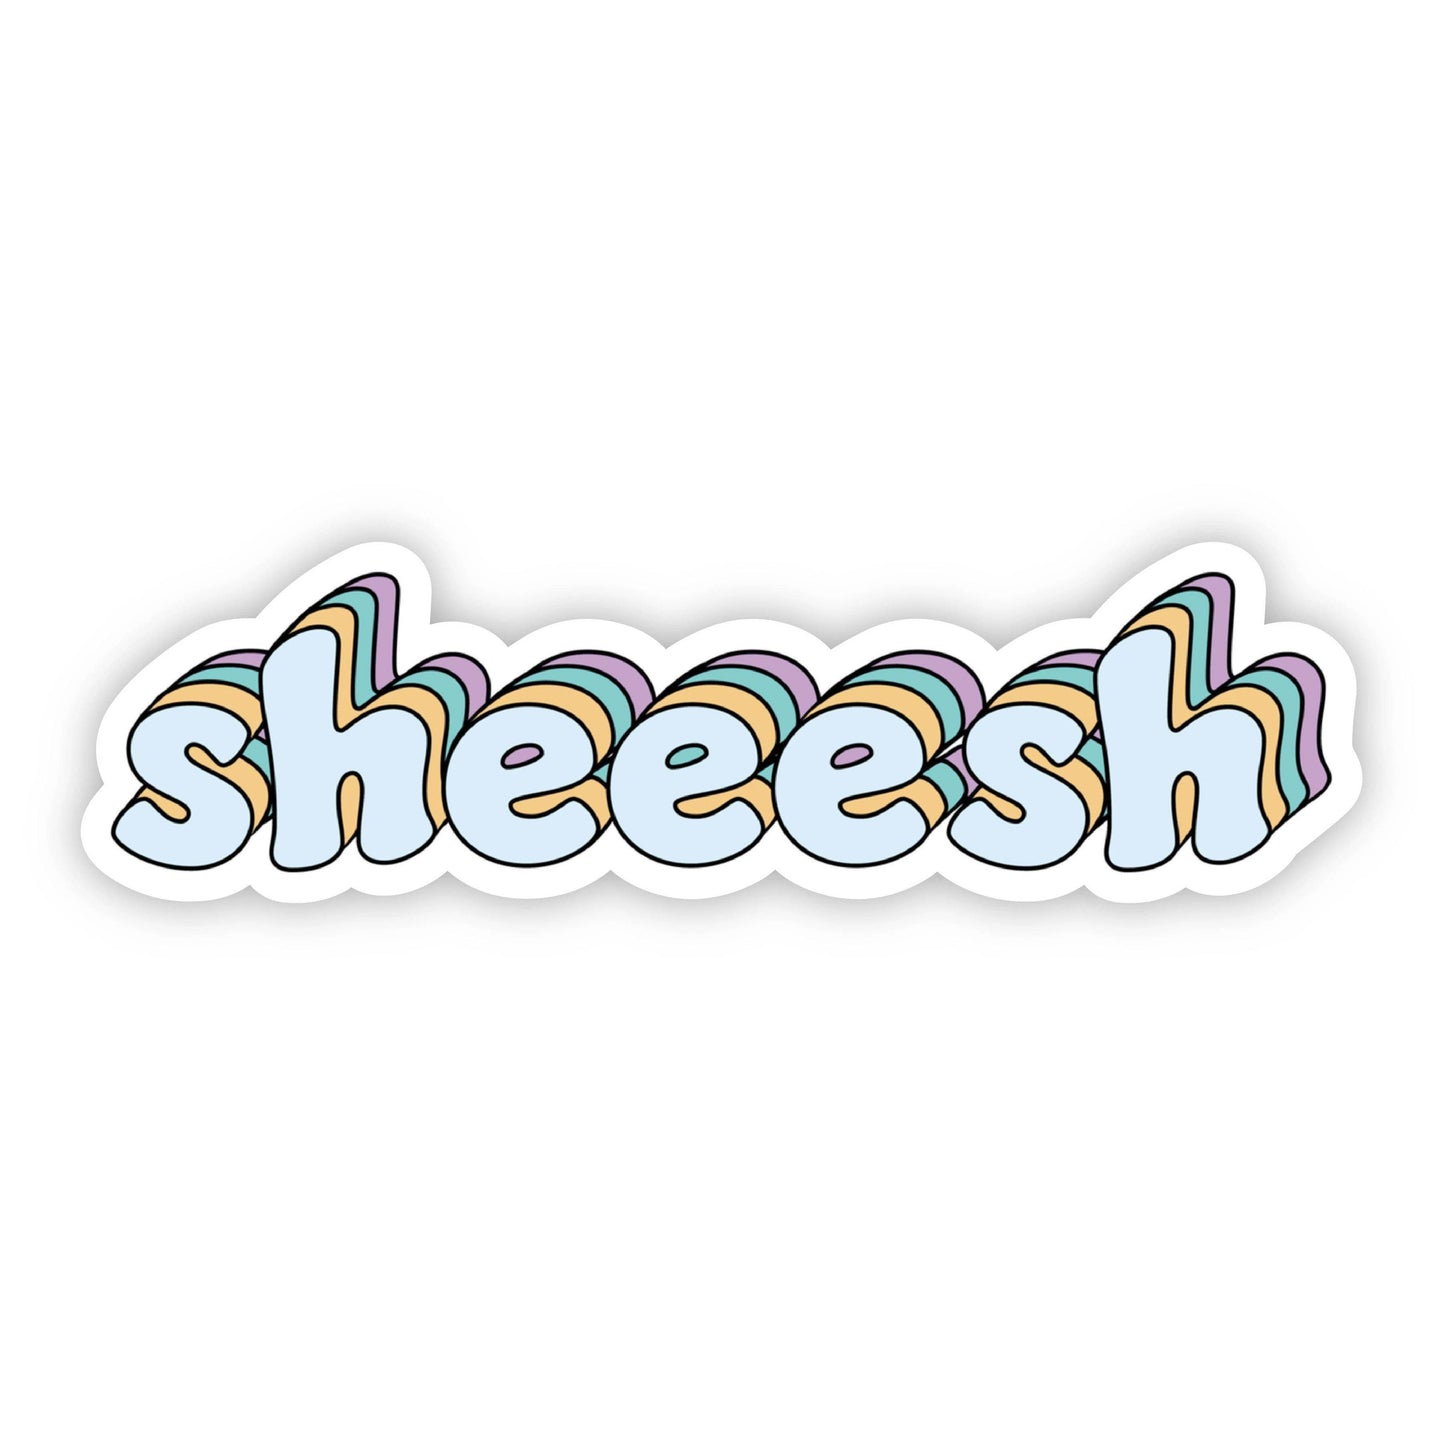 Sheeesh Sticker